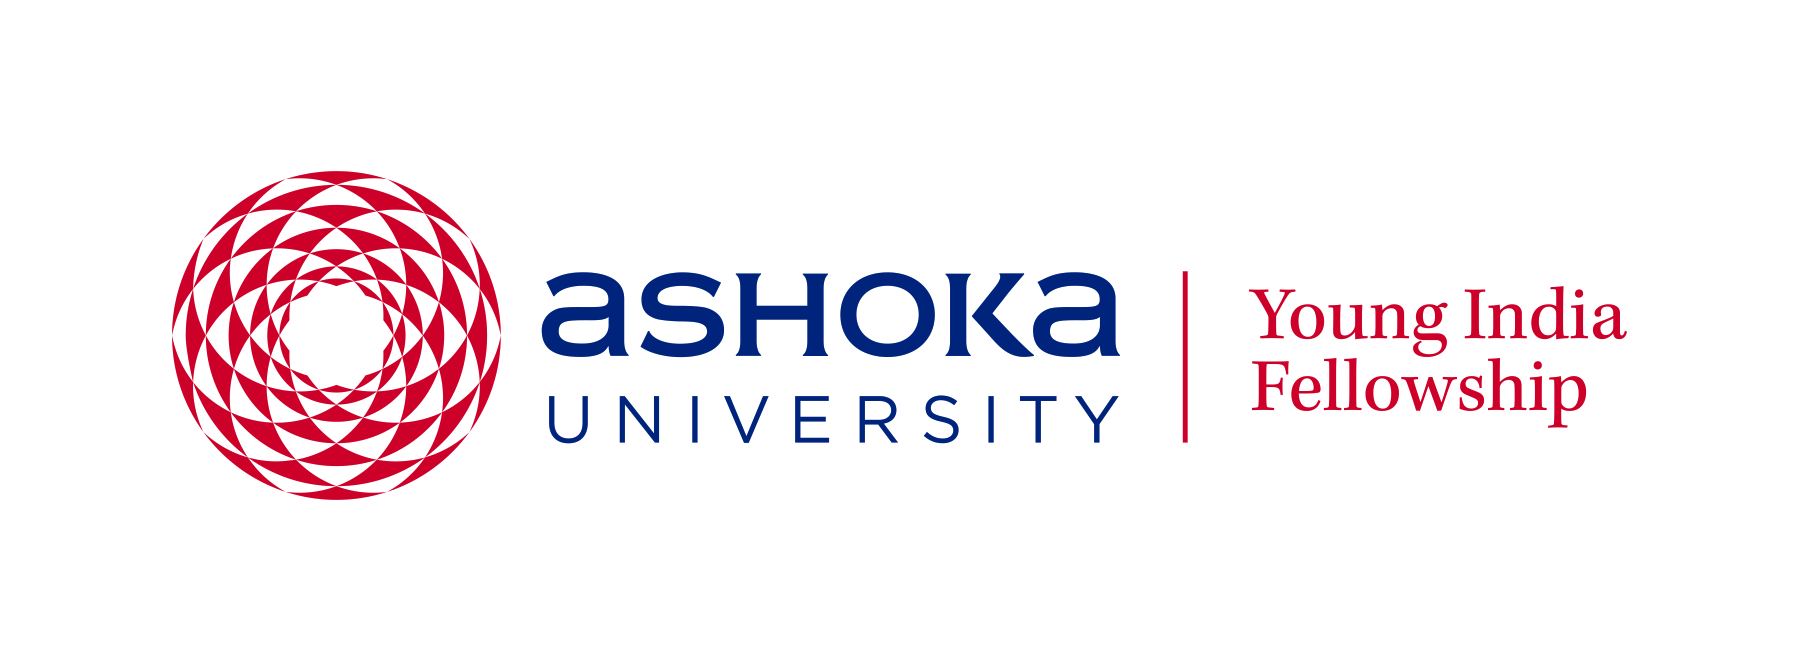 Lehigh Announces International Partnership with Ashoka University | News  Article | Lehigh University